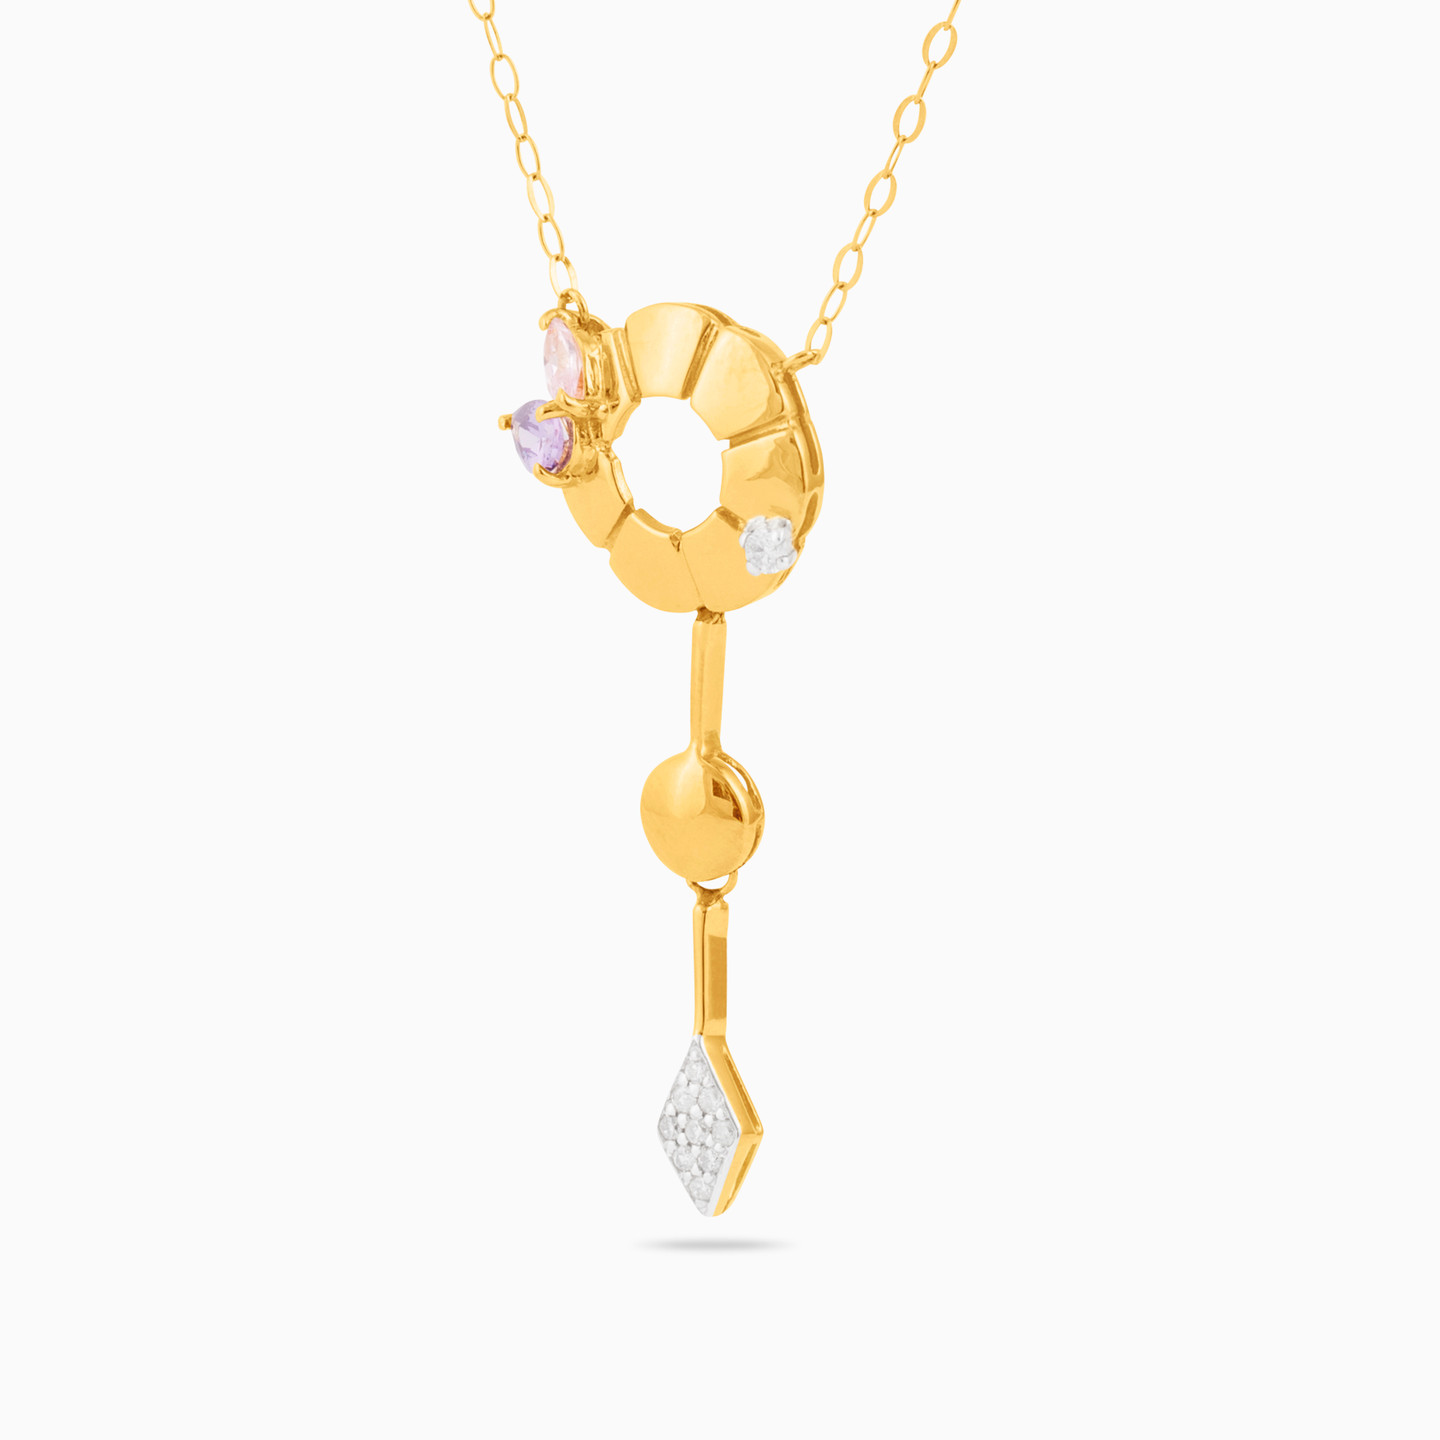 18K Gold Diamond & Colored Stones Drop Pendant Necklace - 2